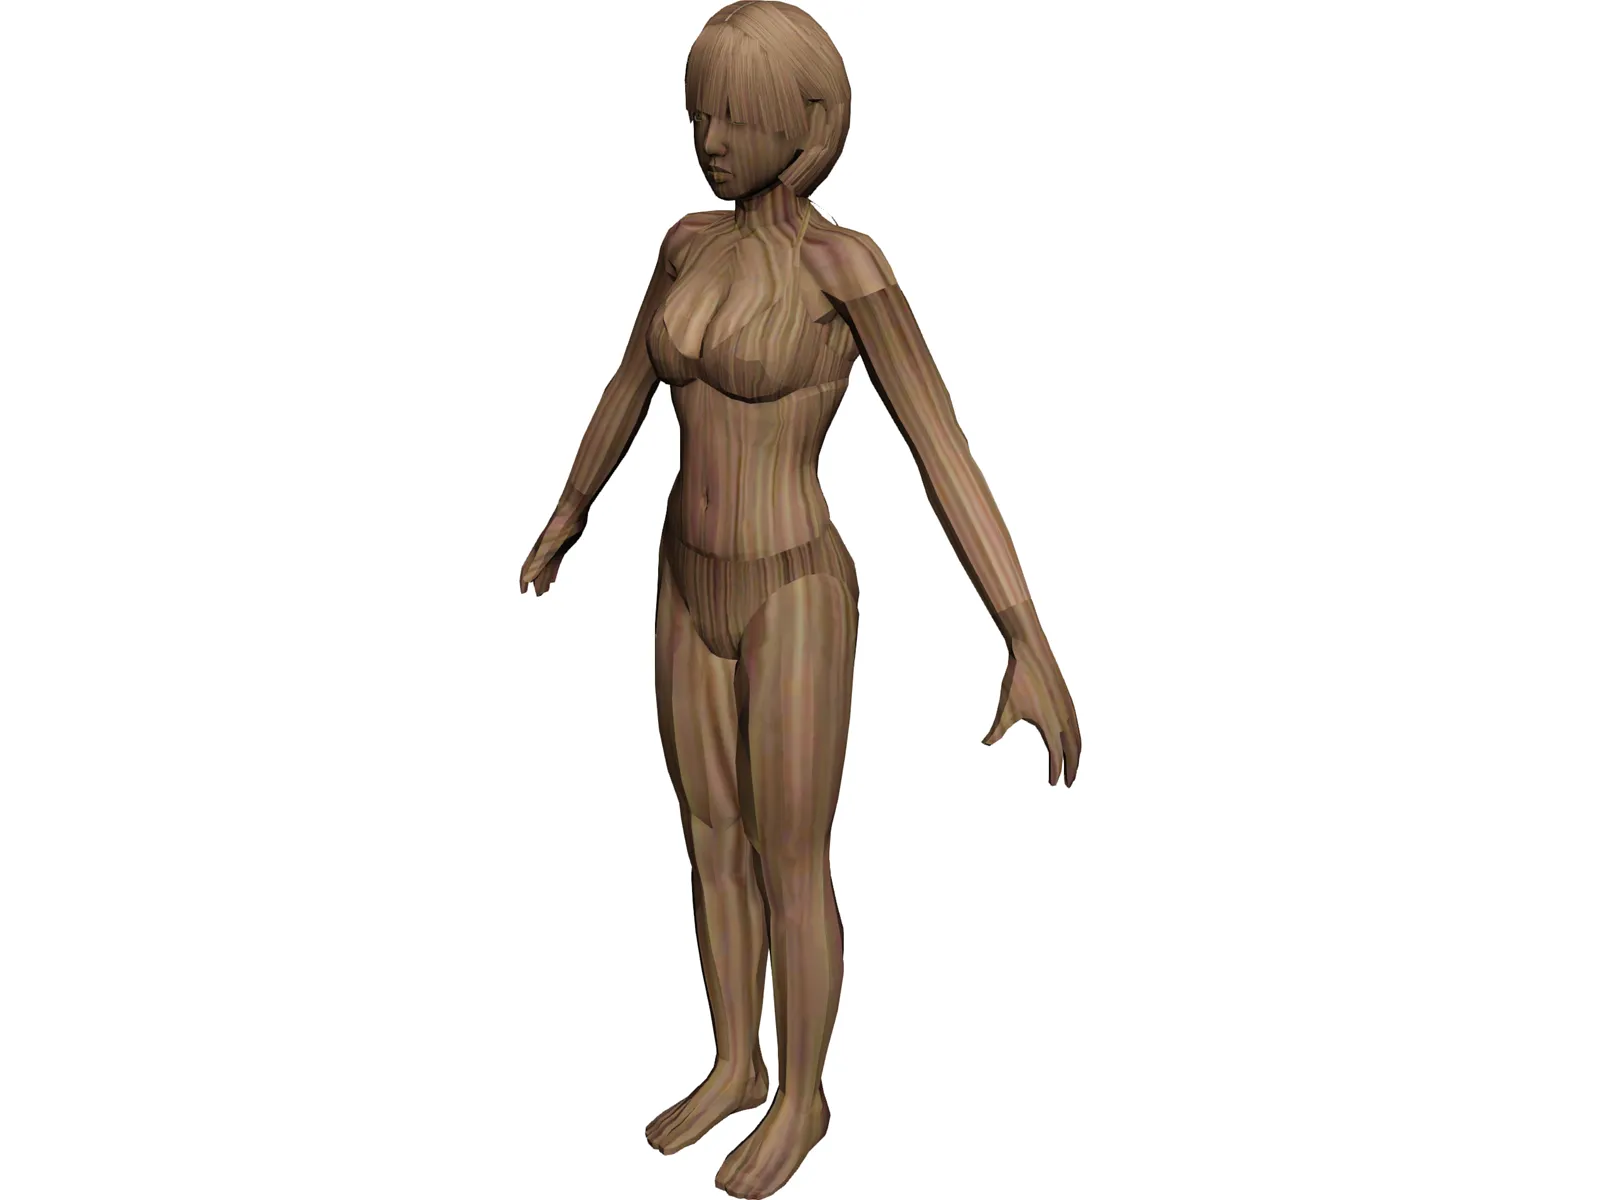 Bikini Girl 3D Model